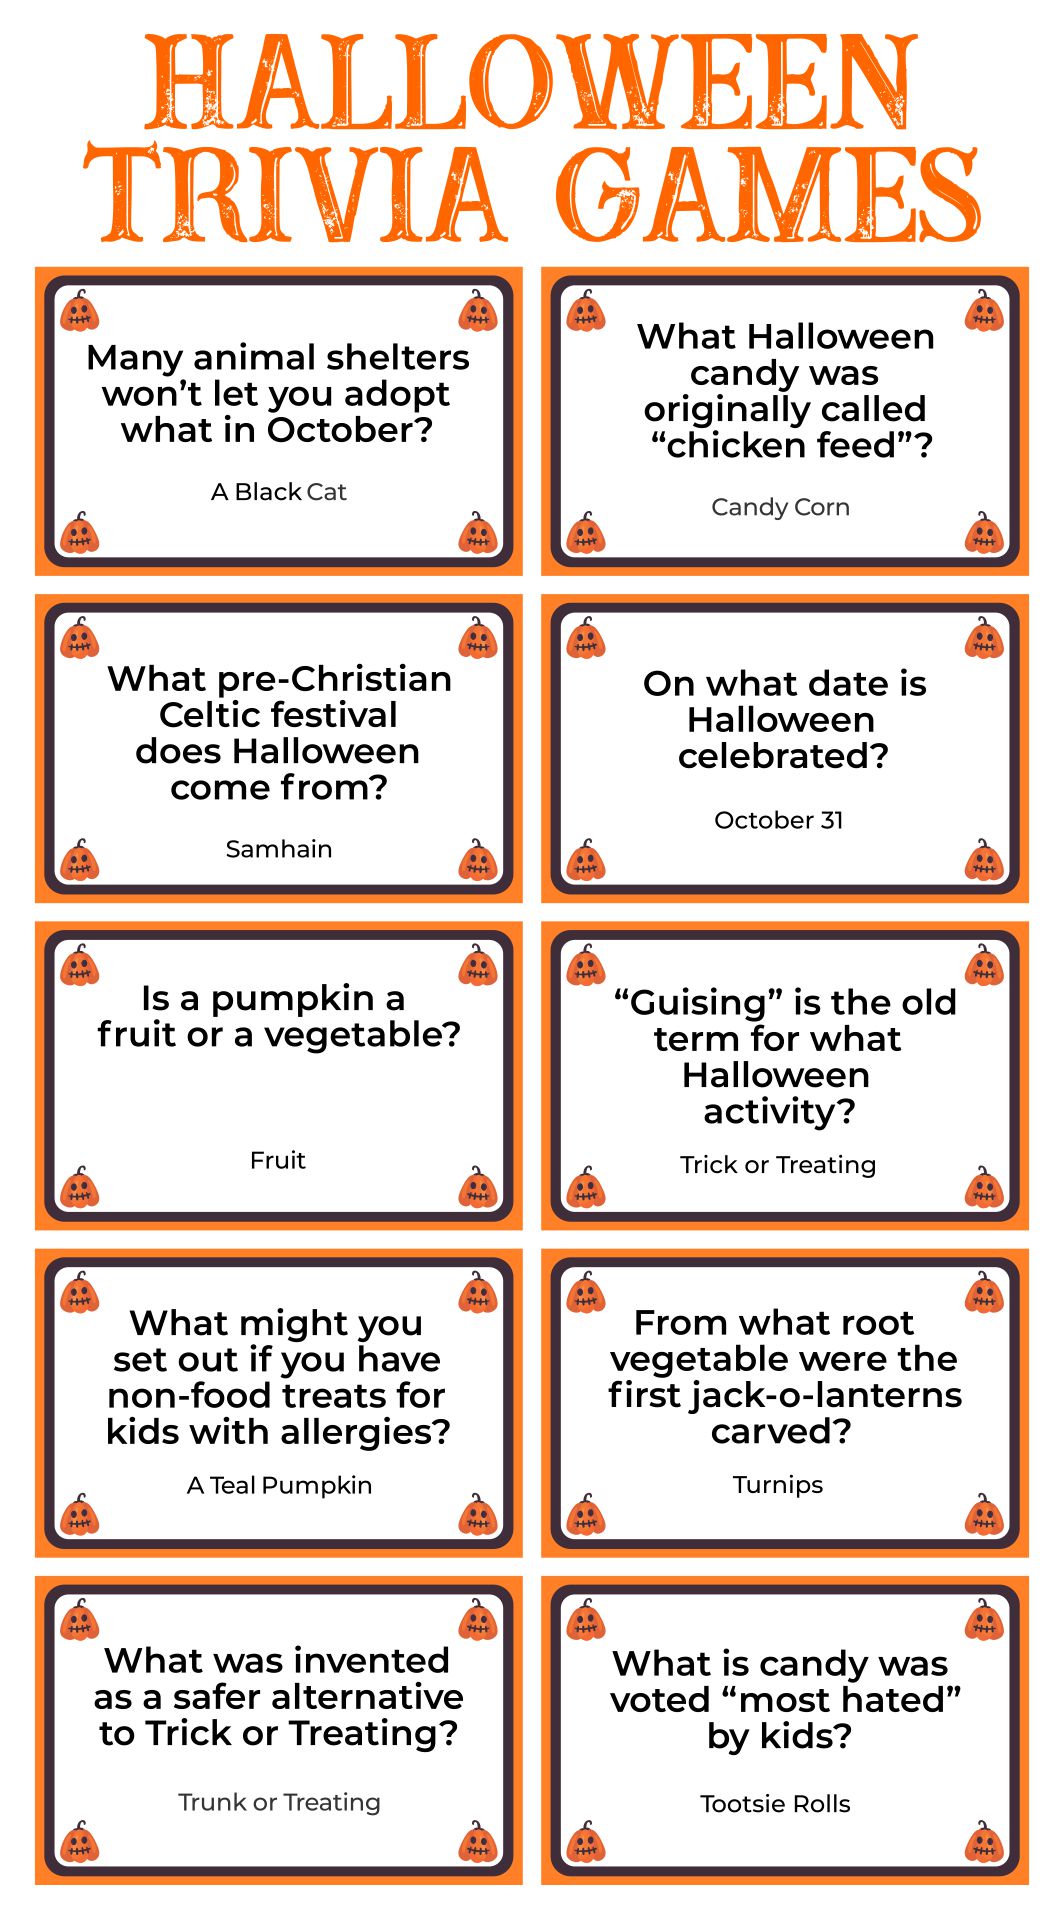 15 Best Free Printable Halloween Trivia Quizzes